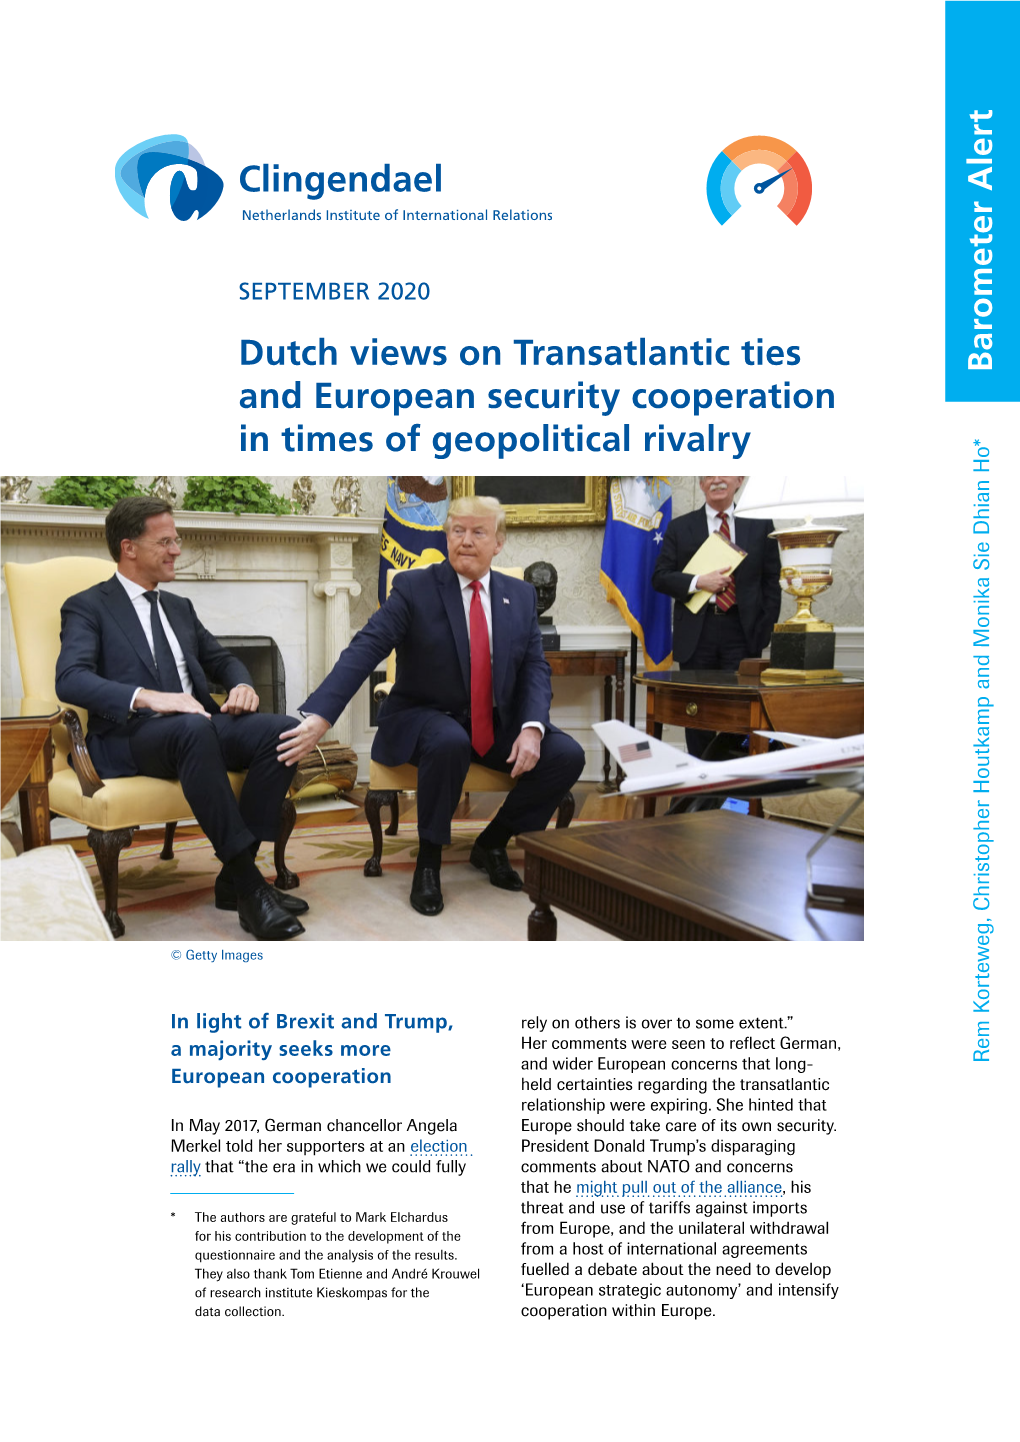 Dutch Views on Transatlantic Ties and European Security Cooperation In